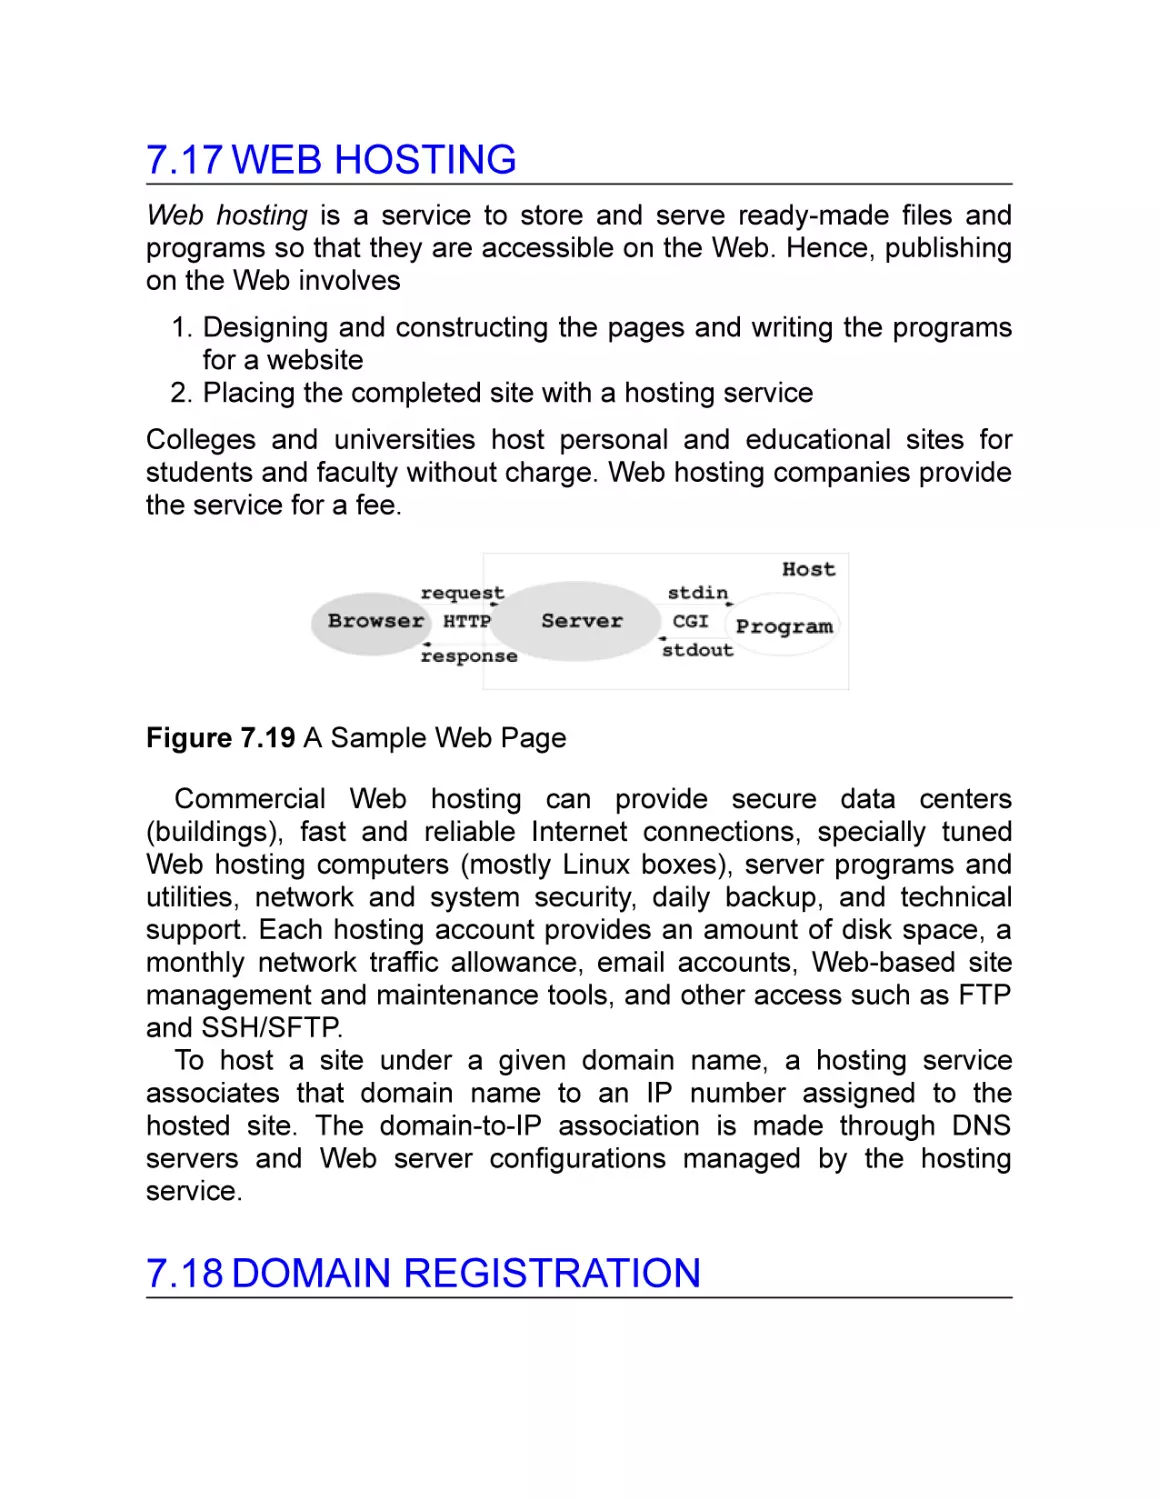 7.17 Web Hosting
7.18 Domain Registration